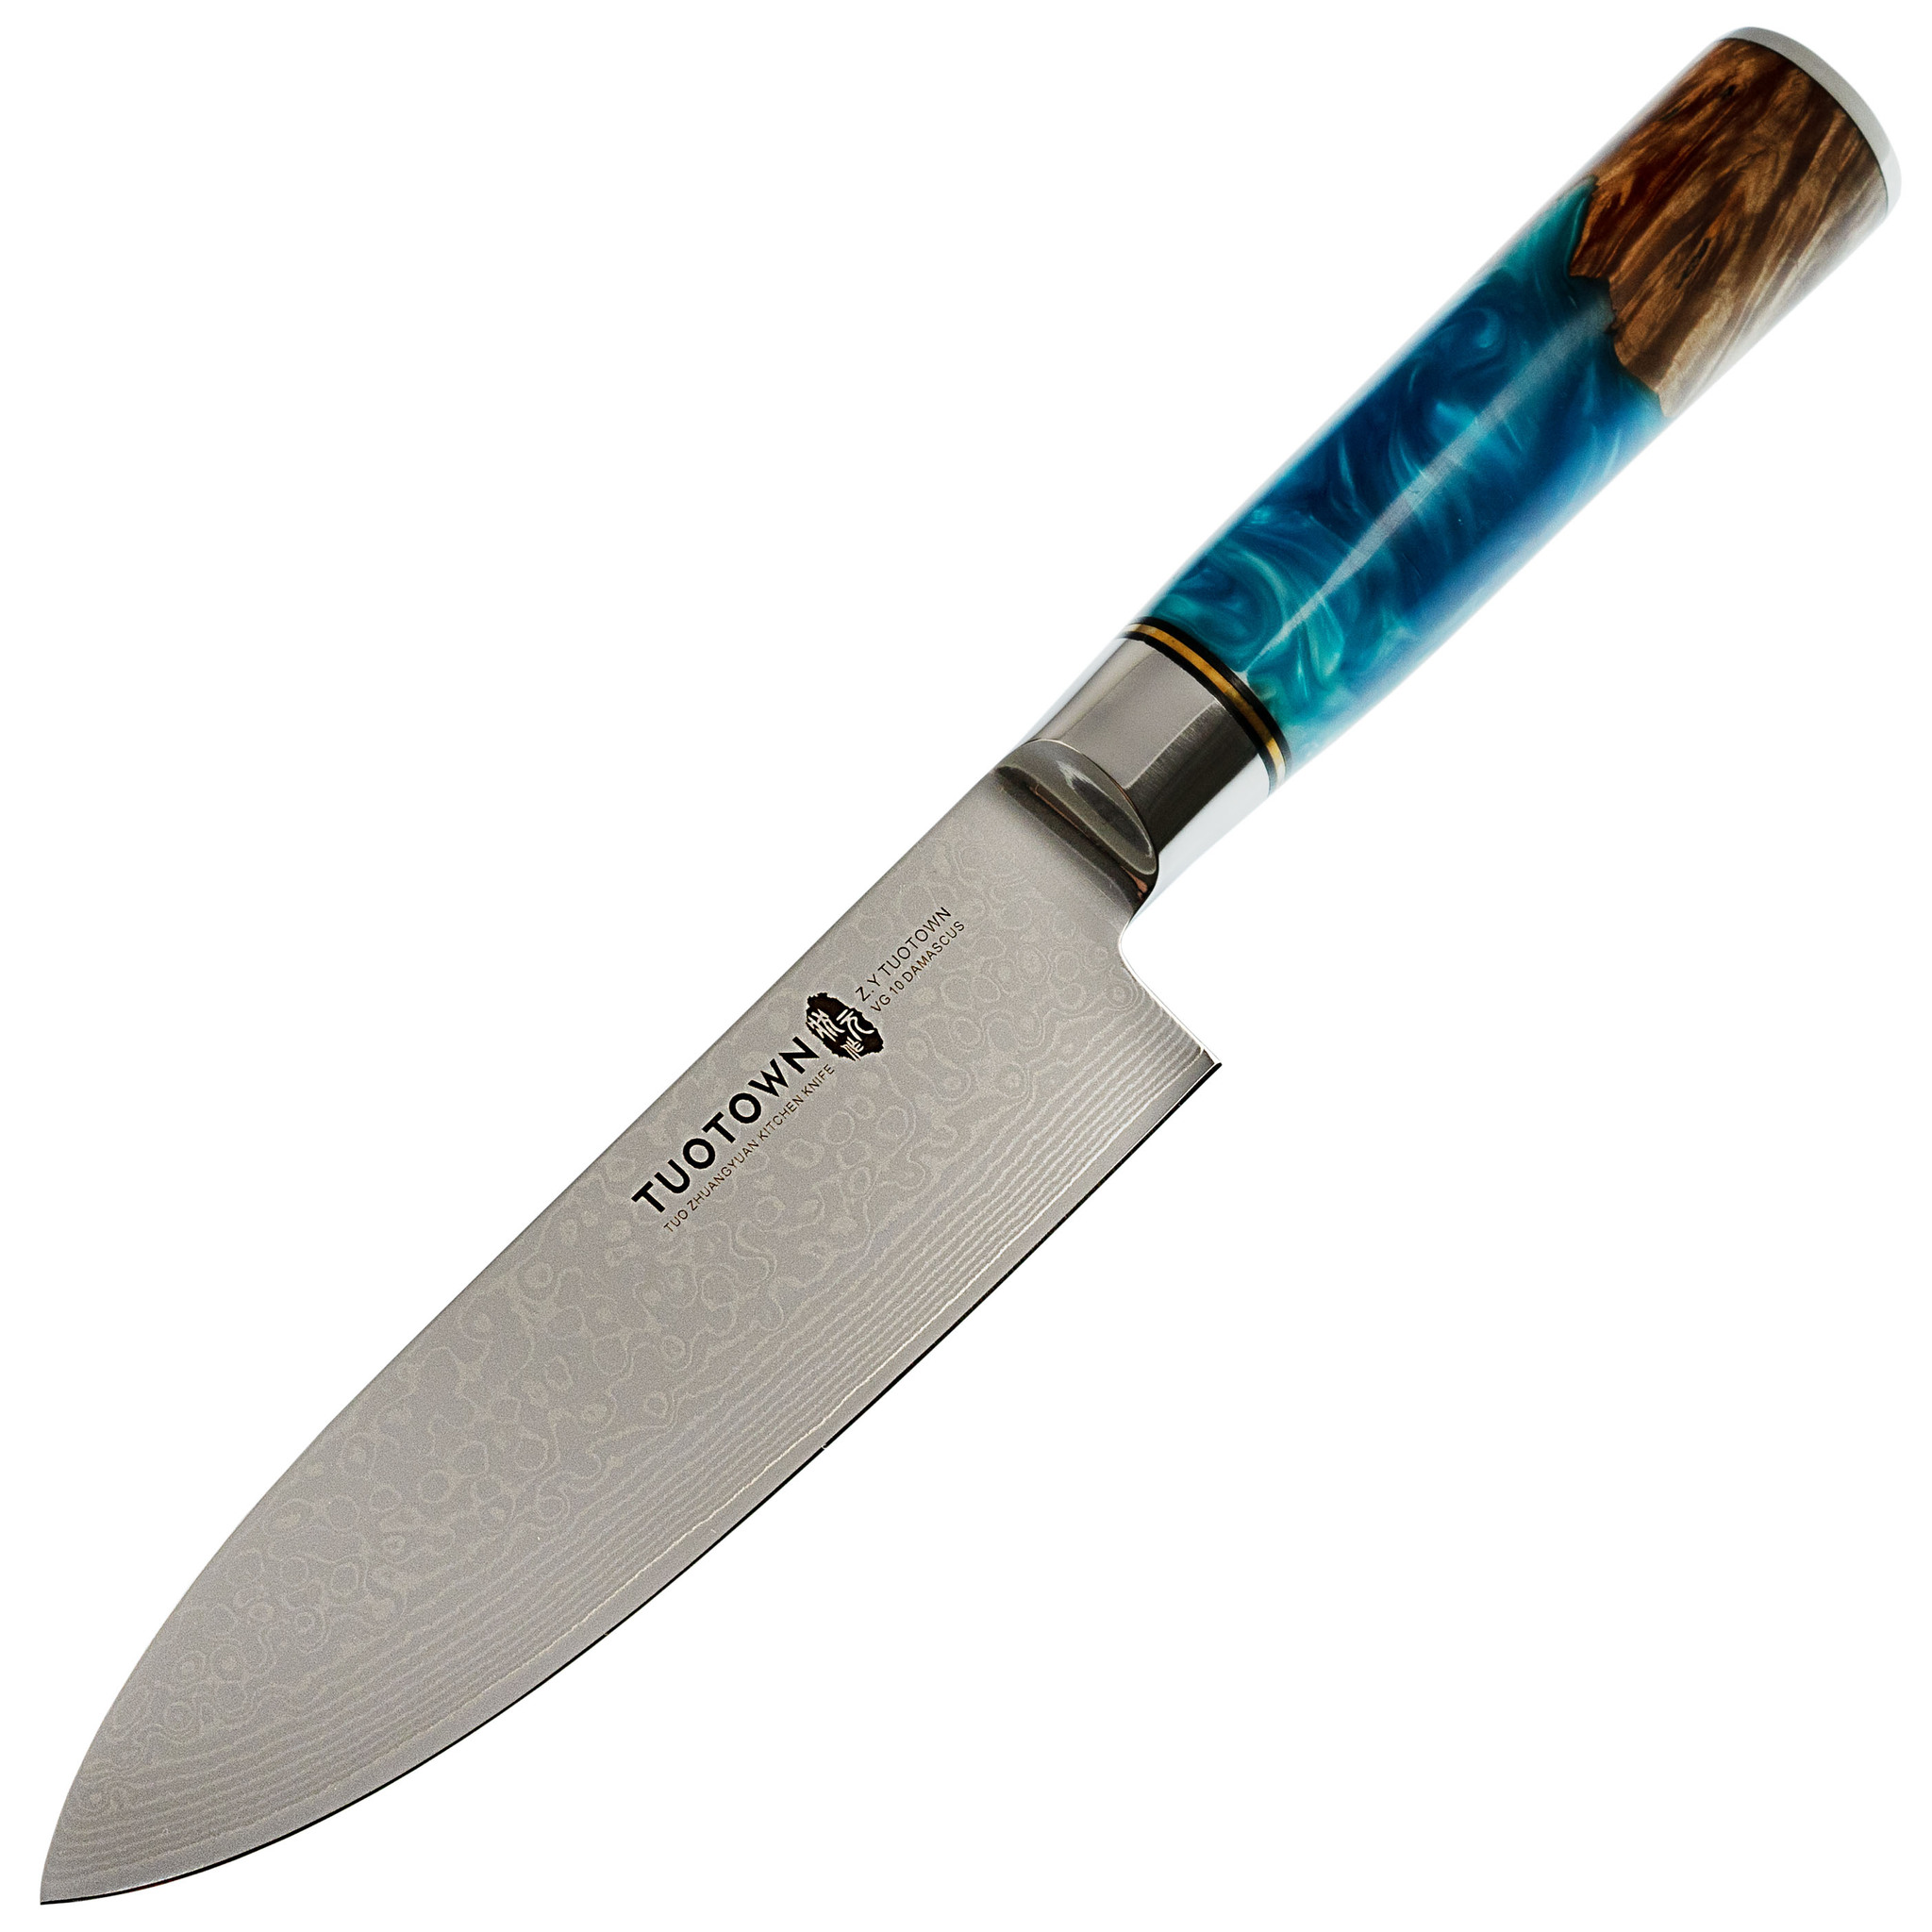 Нож кухонный Tuotown DM003, сталь VG-10, рукоять дерево/эпоксидка - фото 1